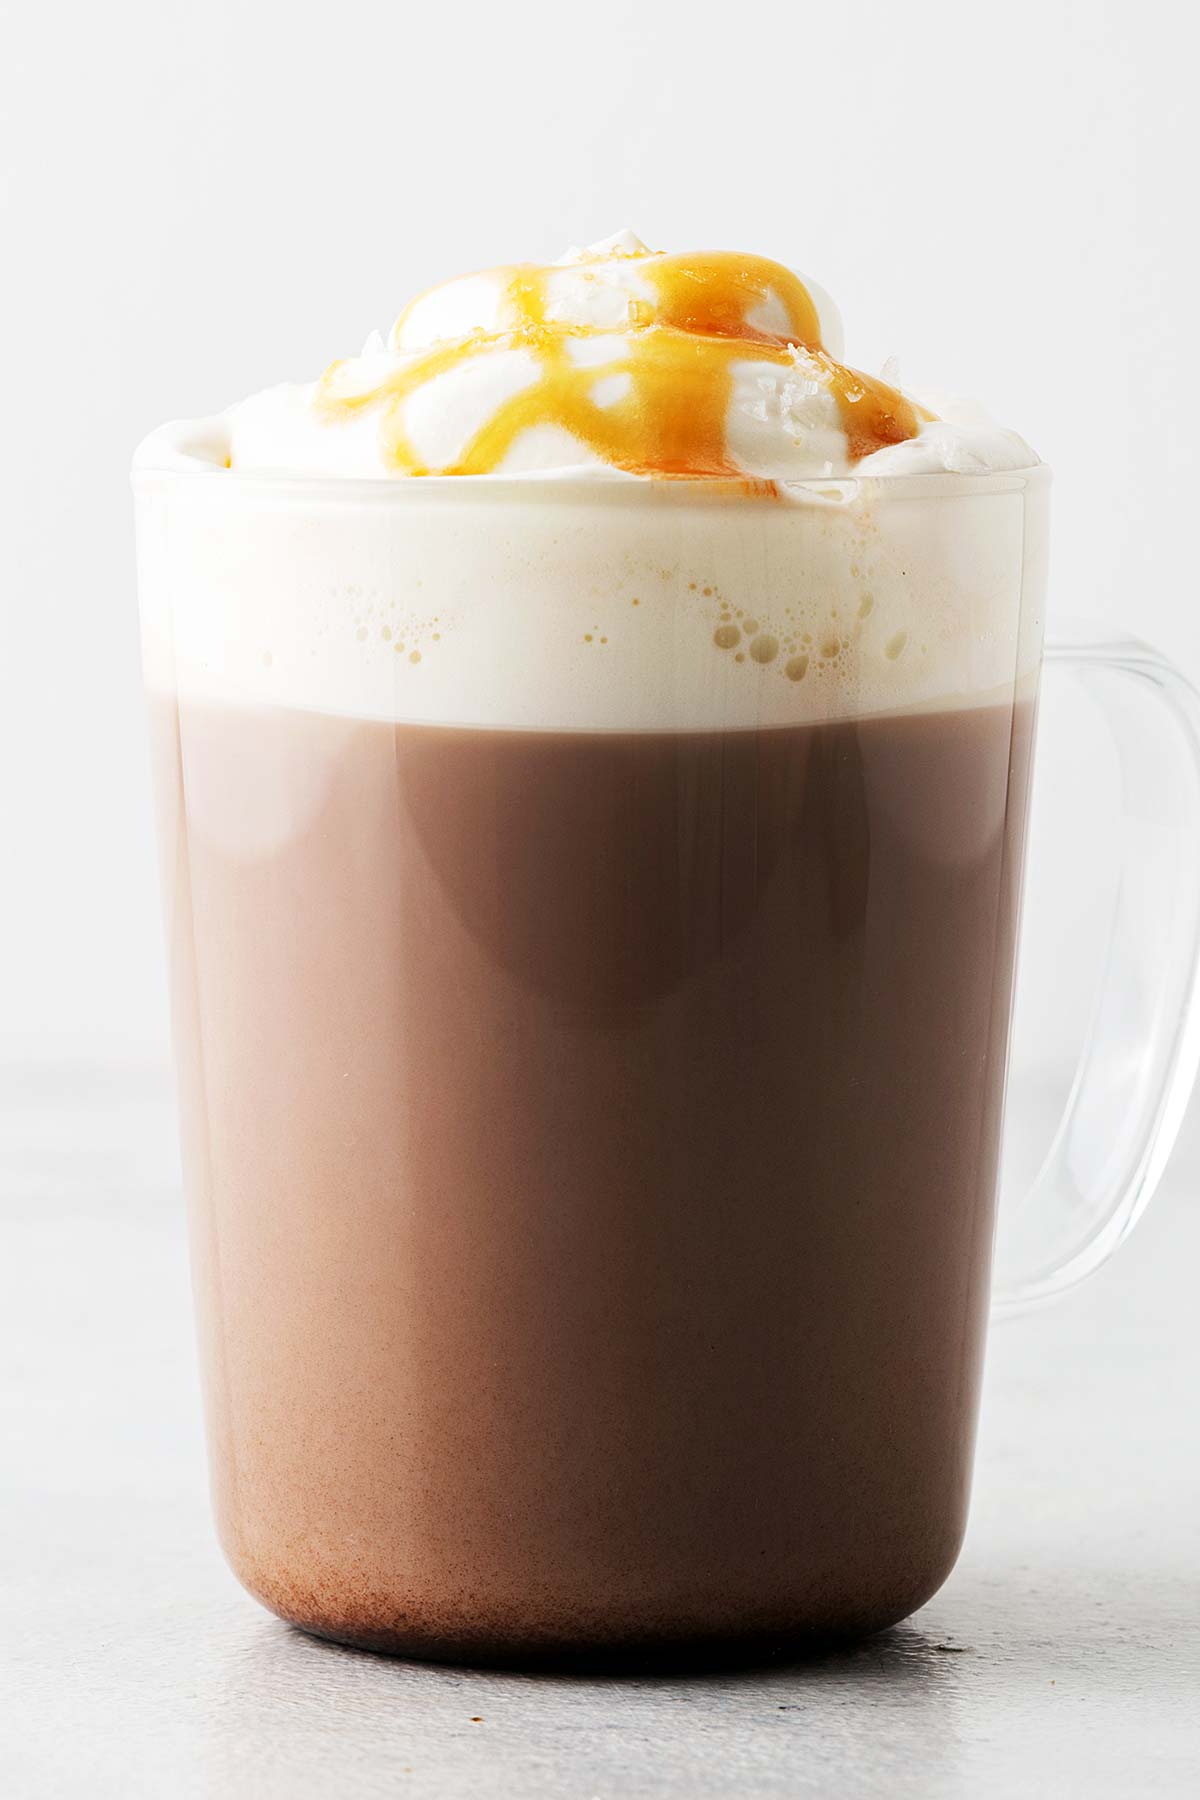 Salted Caramel Hot Chocolate in a glass mug.